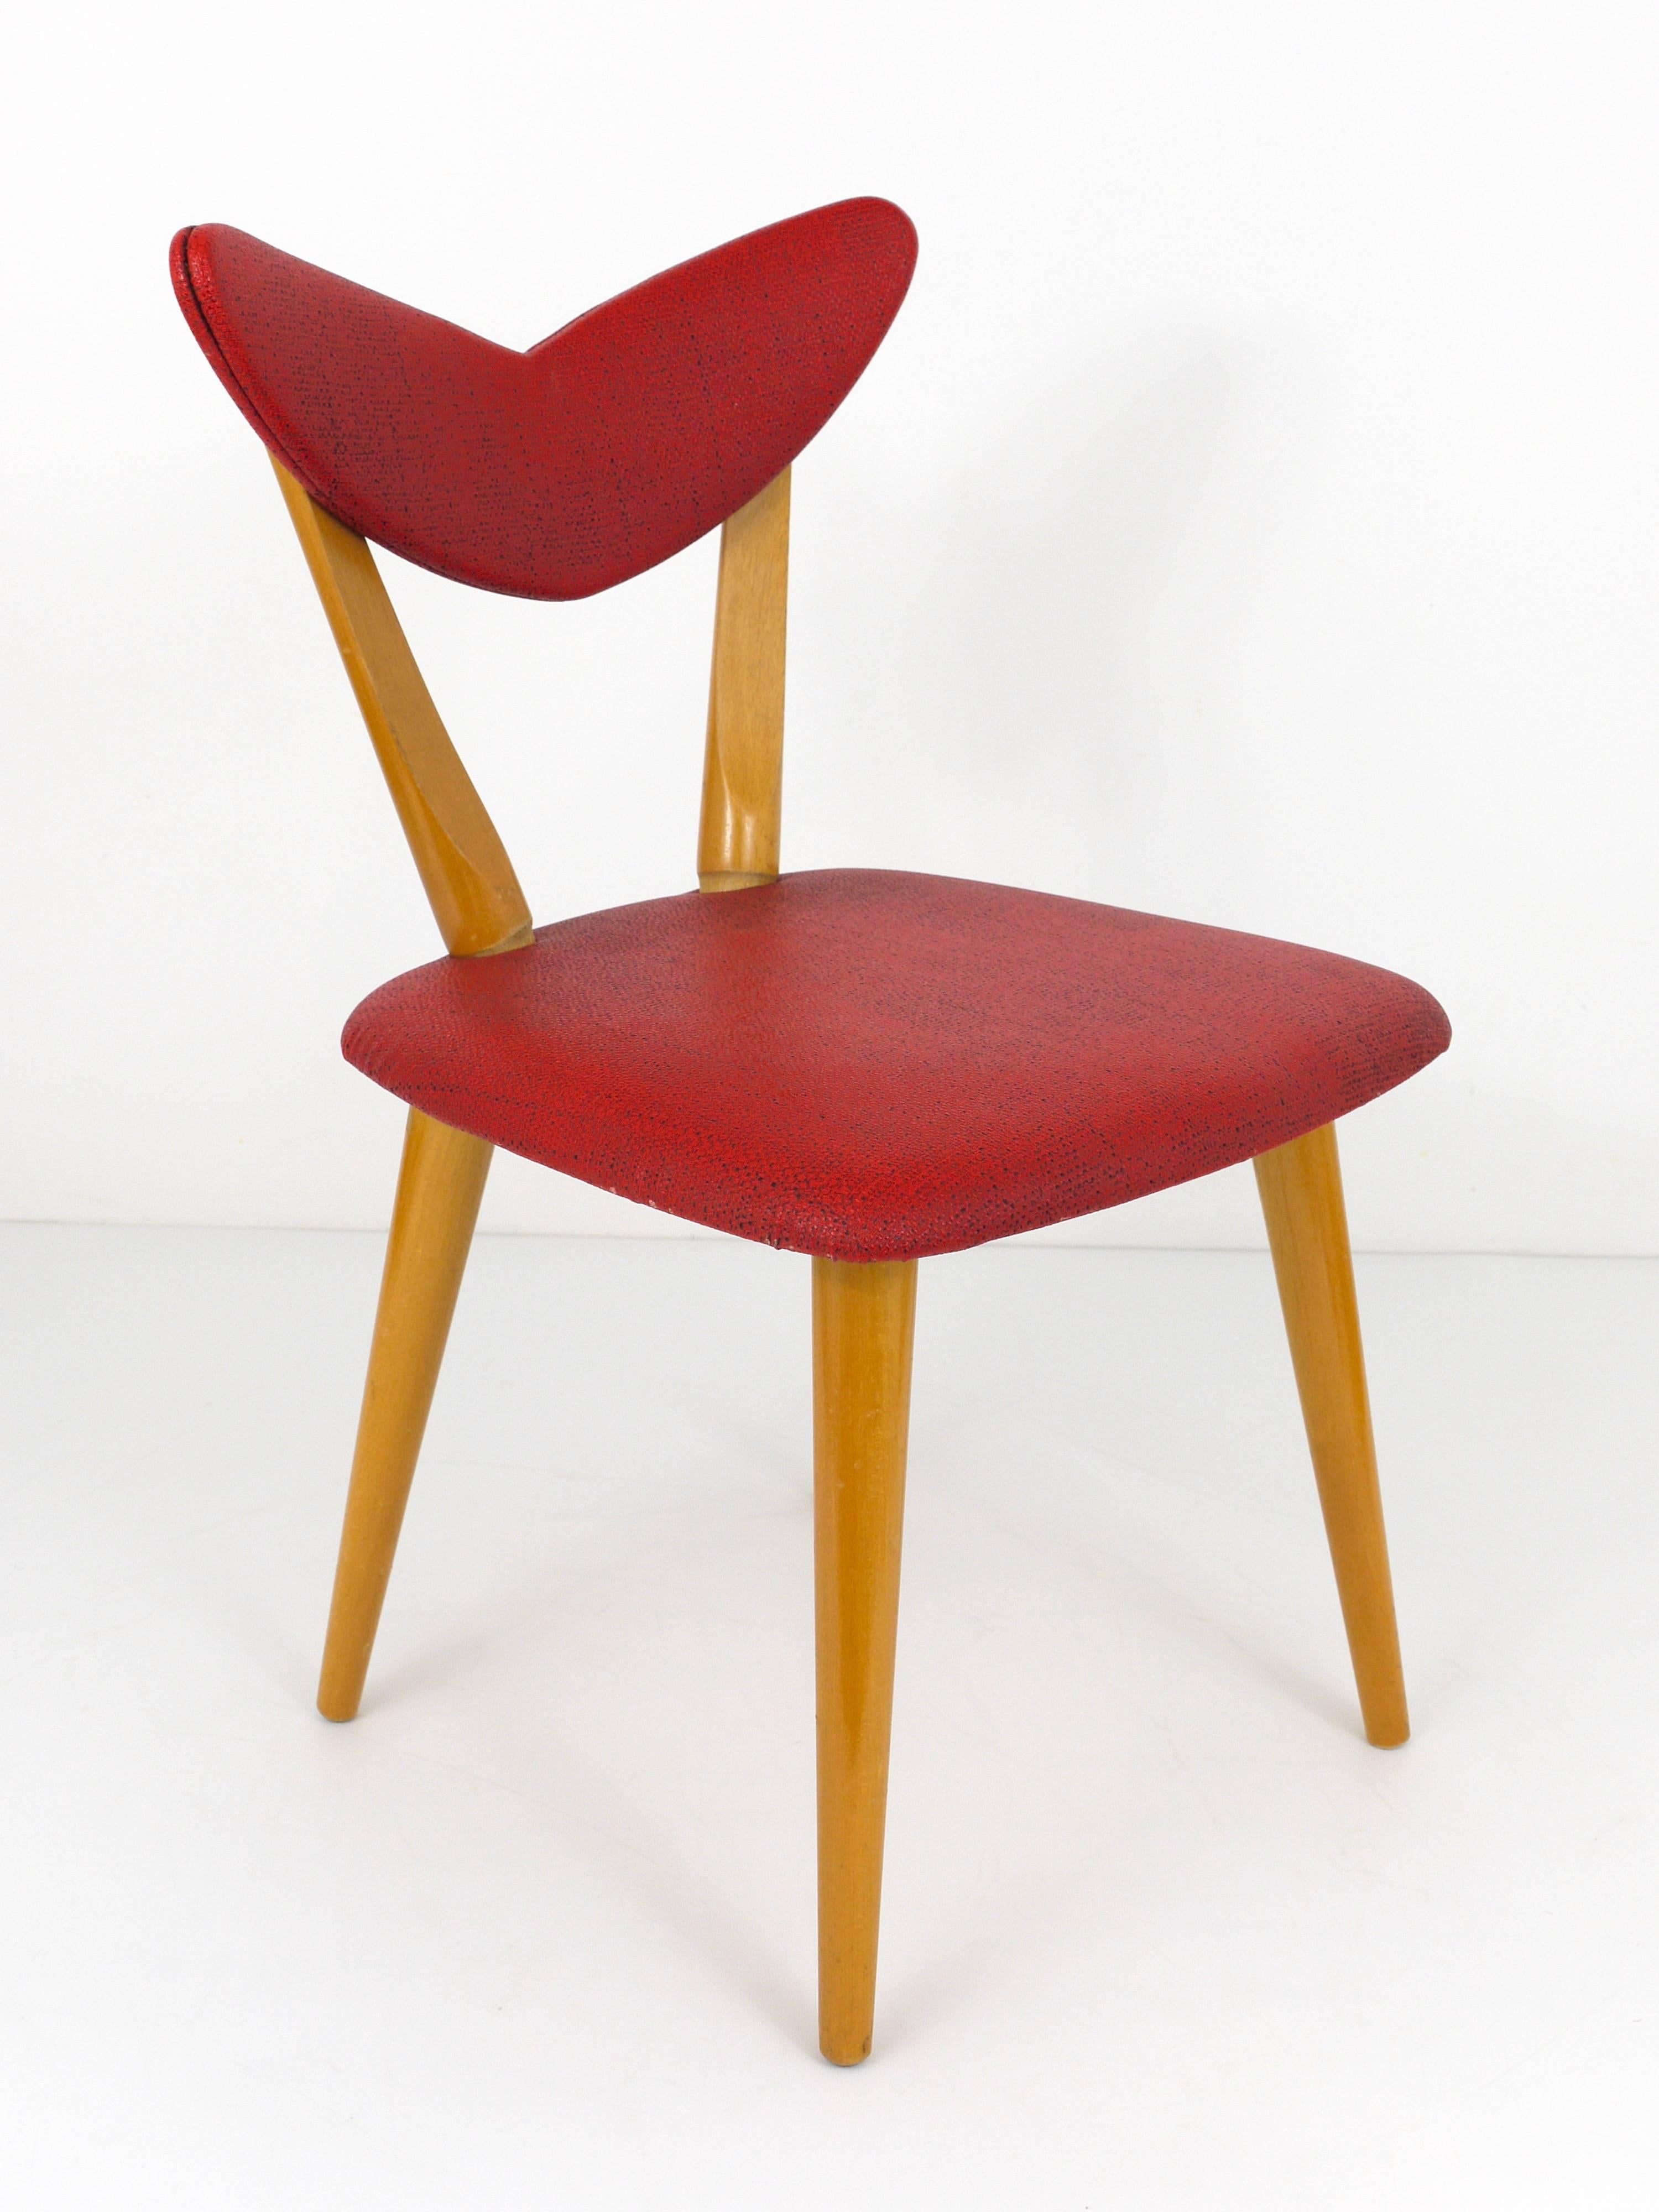 Austrian Red Heart Mid Century Modern Chair for Children,  Austria, 1950s For Sale